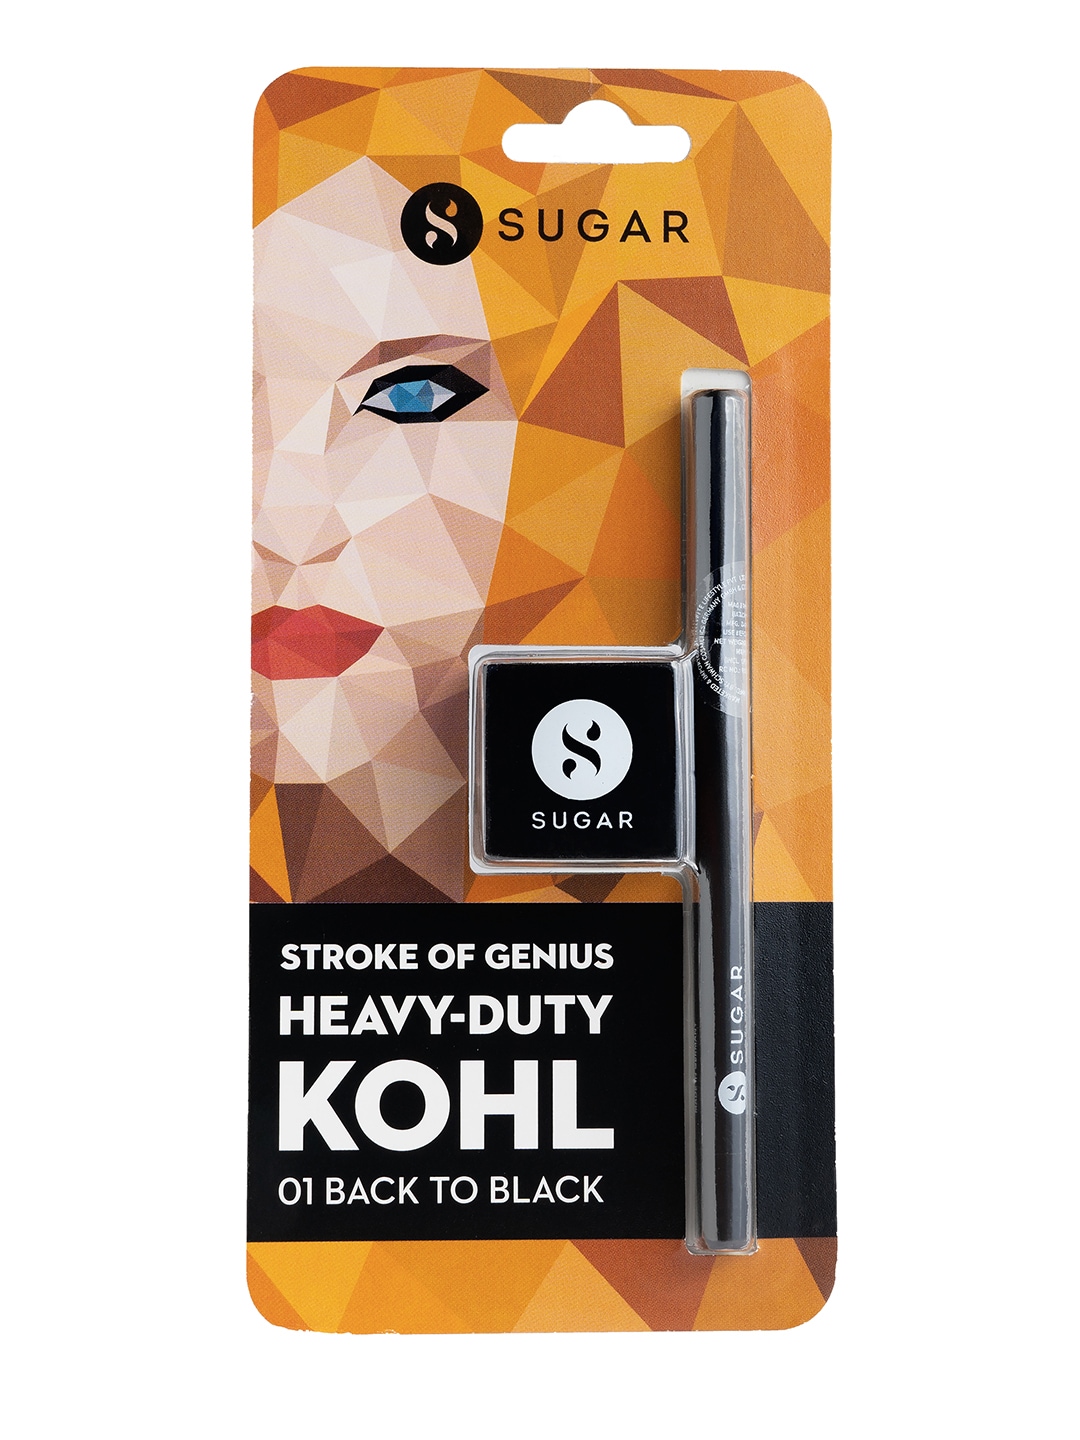 SUGAR Cosmetics Stroke Of Genius Heavy-duty Kohl - 01 Back To Black (Black) -1.2 g Price in India